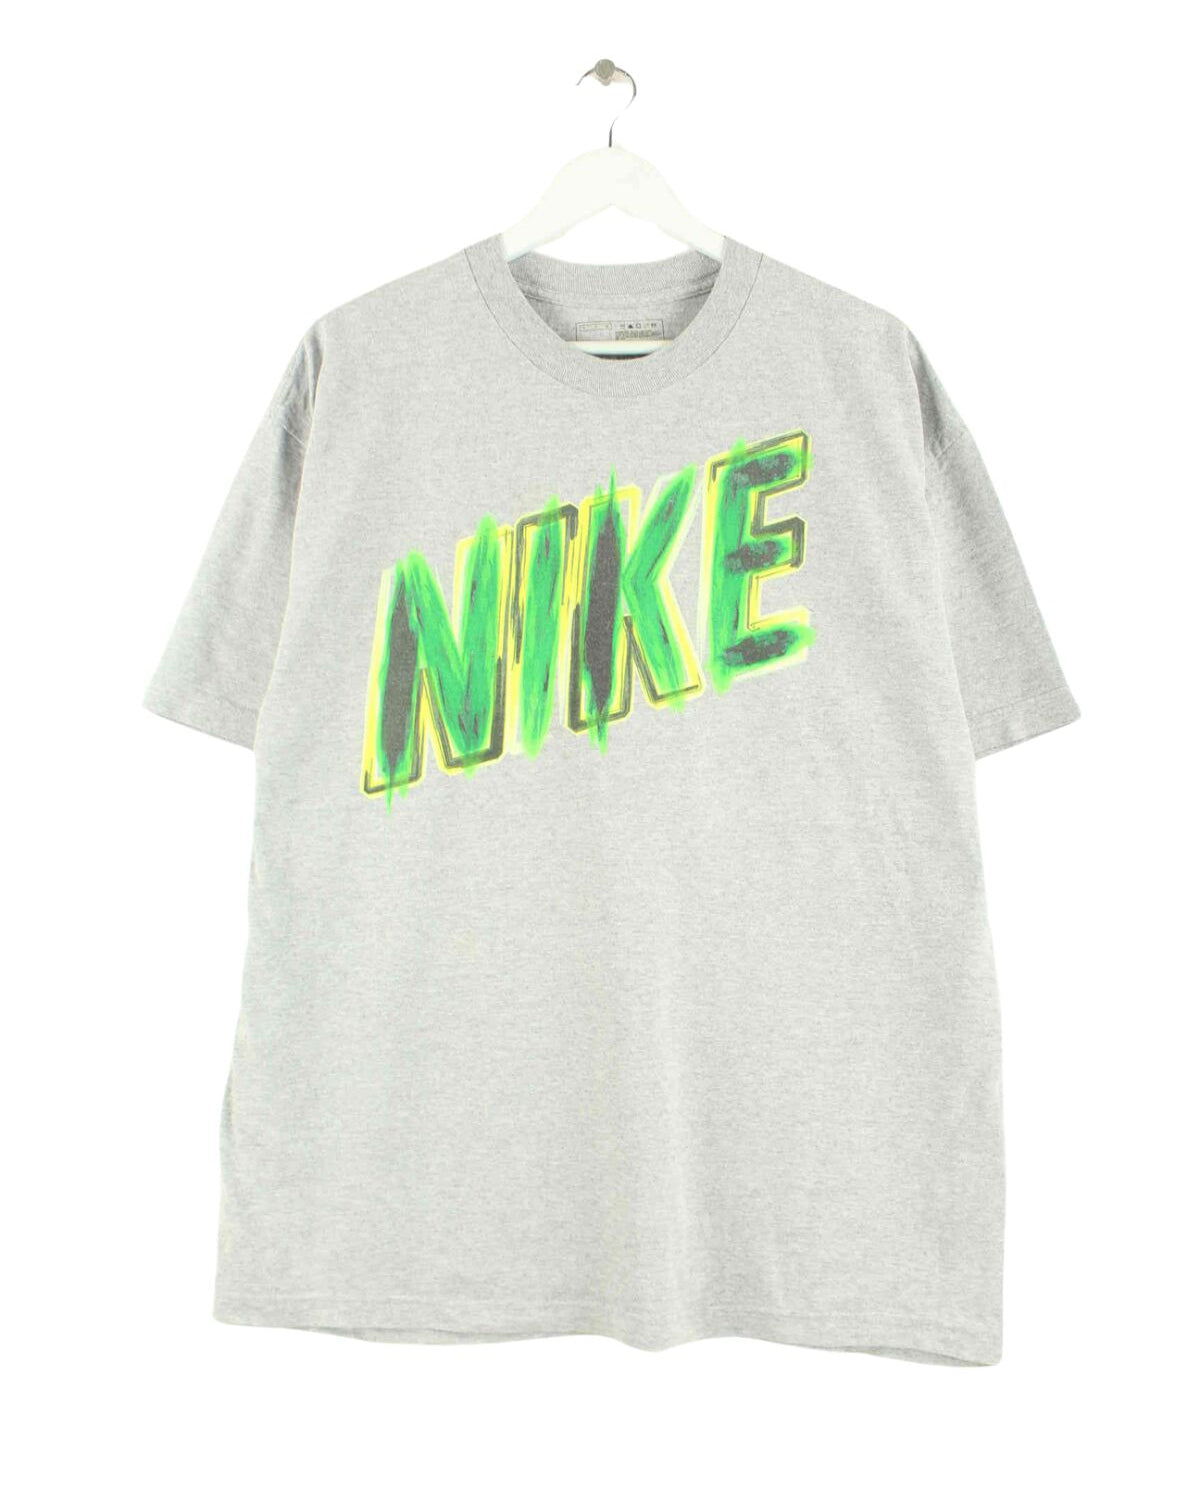 Nike Spellout Print T-Shirt Grau XL (front image)